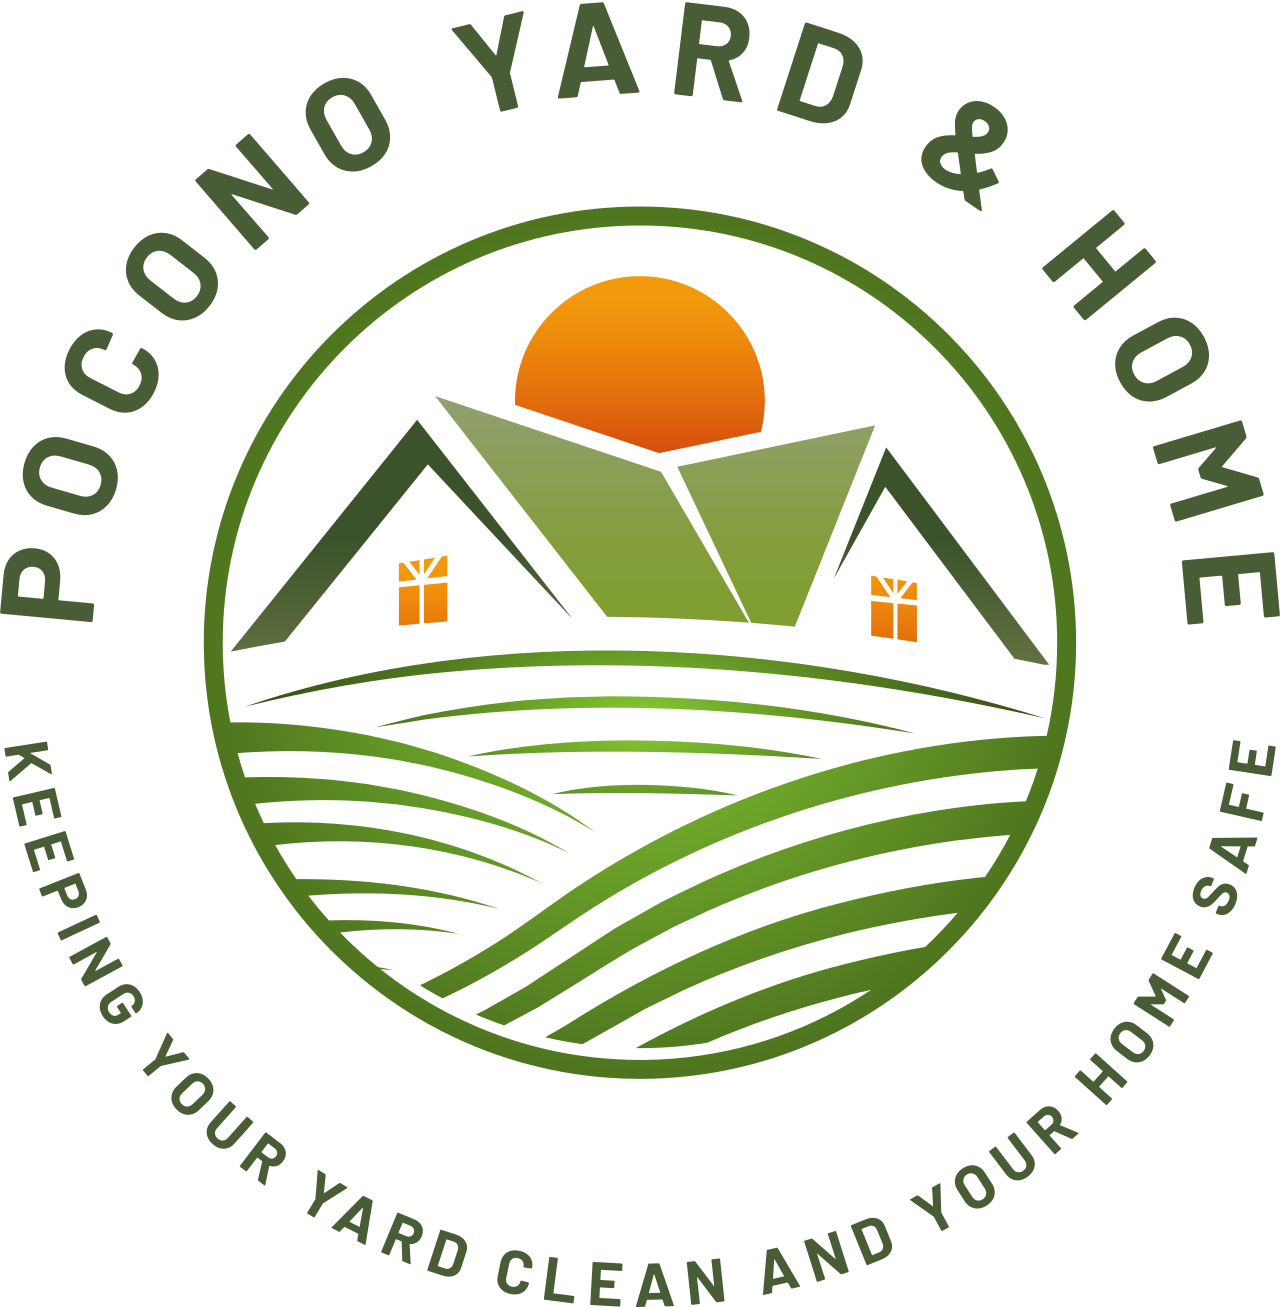 Pocono Yard & Home's logo